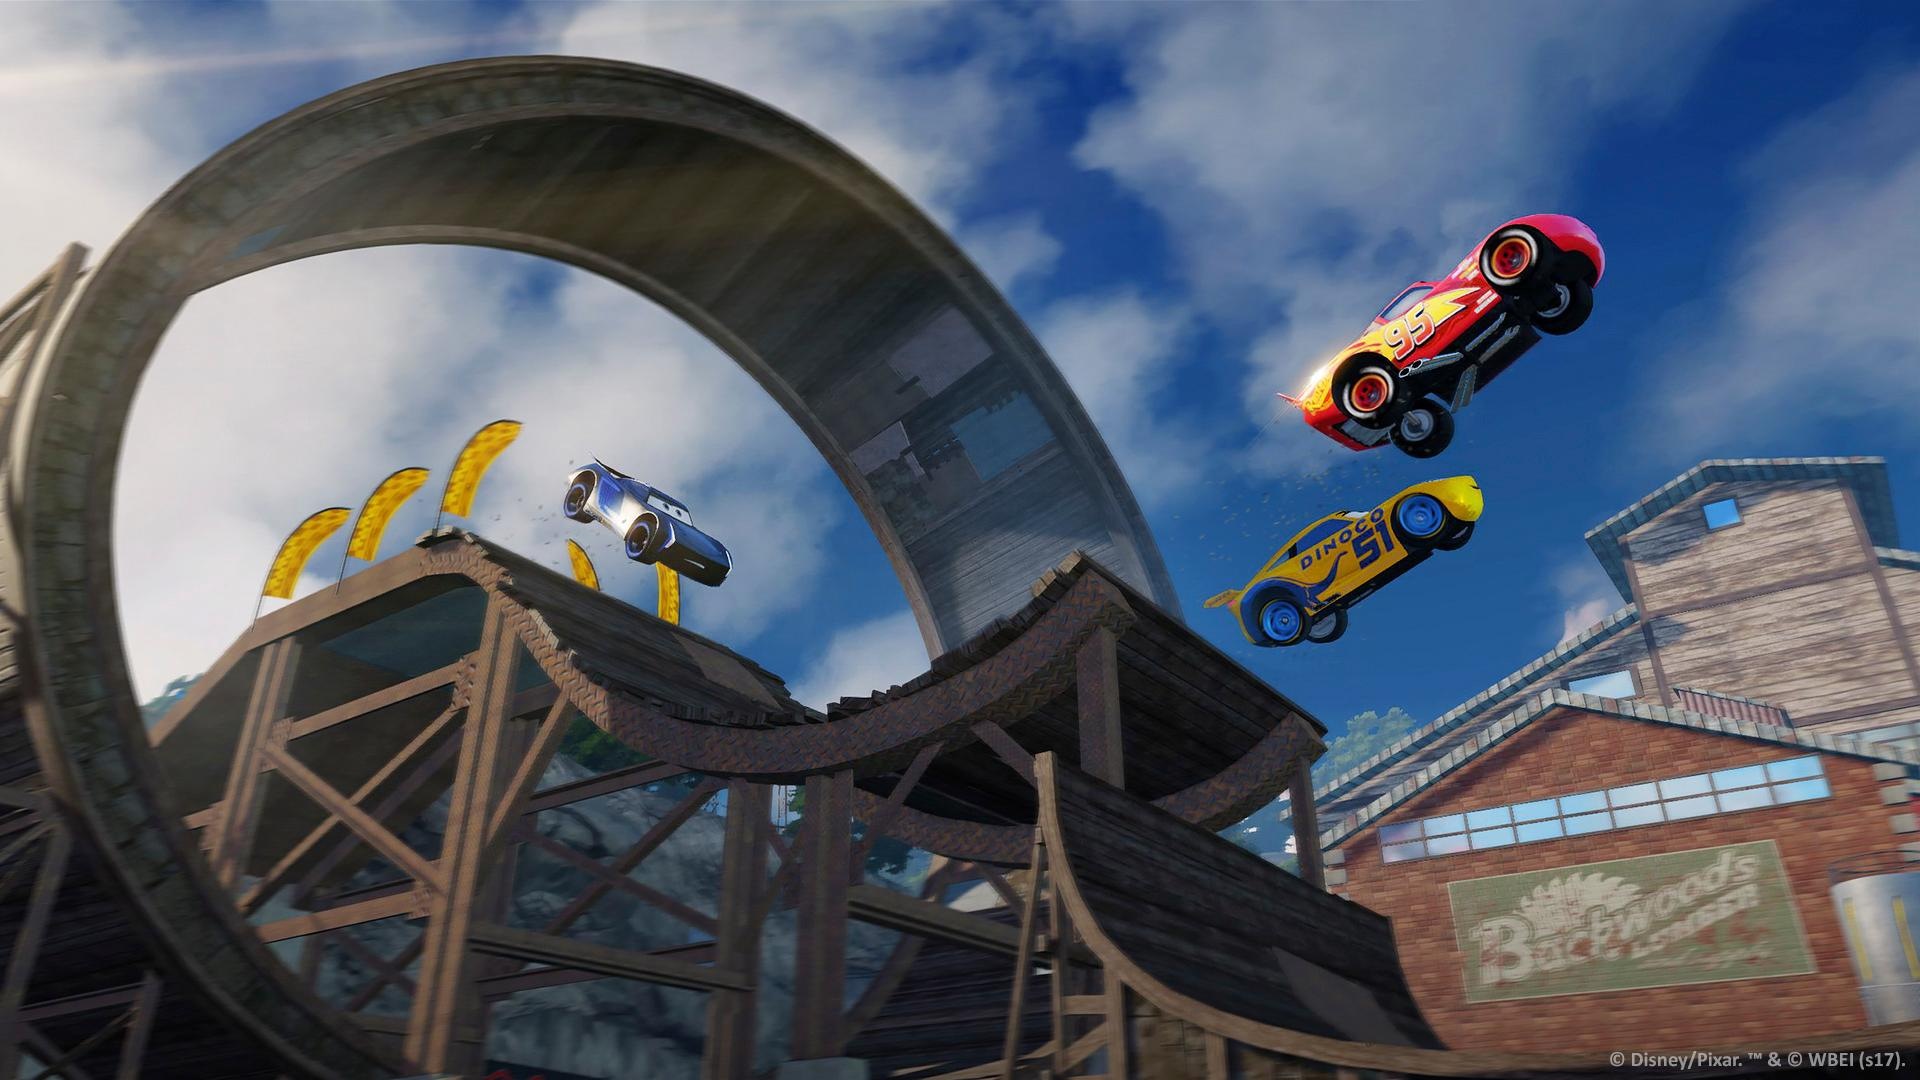 Warner Games Spielesoftware »Cars 3: Driven to Win«, Nintendo Wii U, Software Pyramide